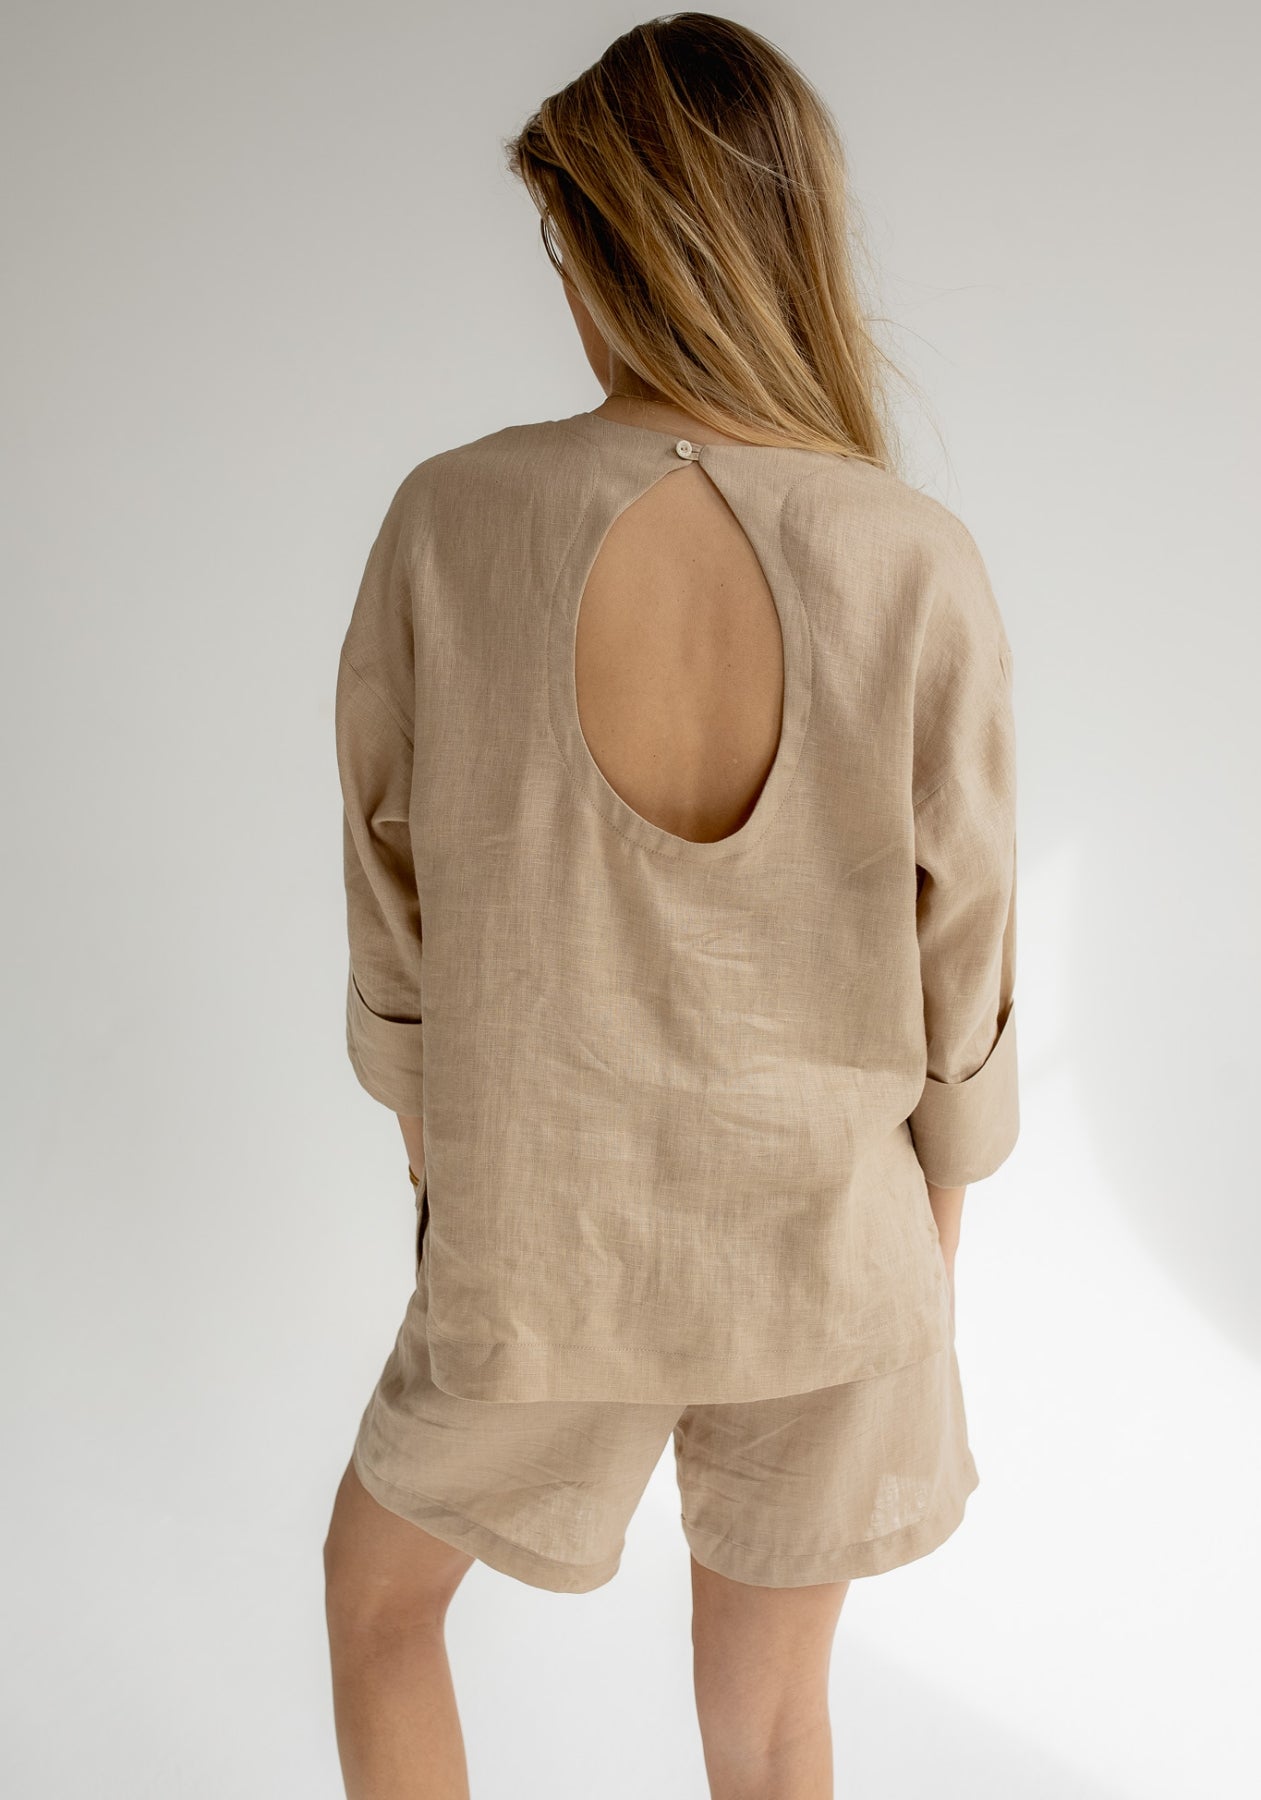 Women's linen top open back Beige natural